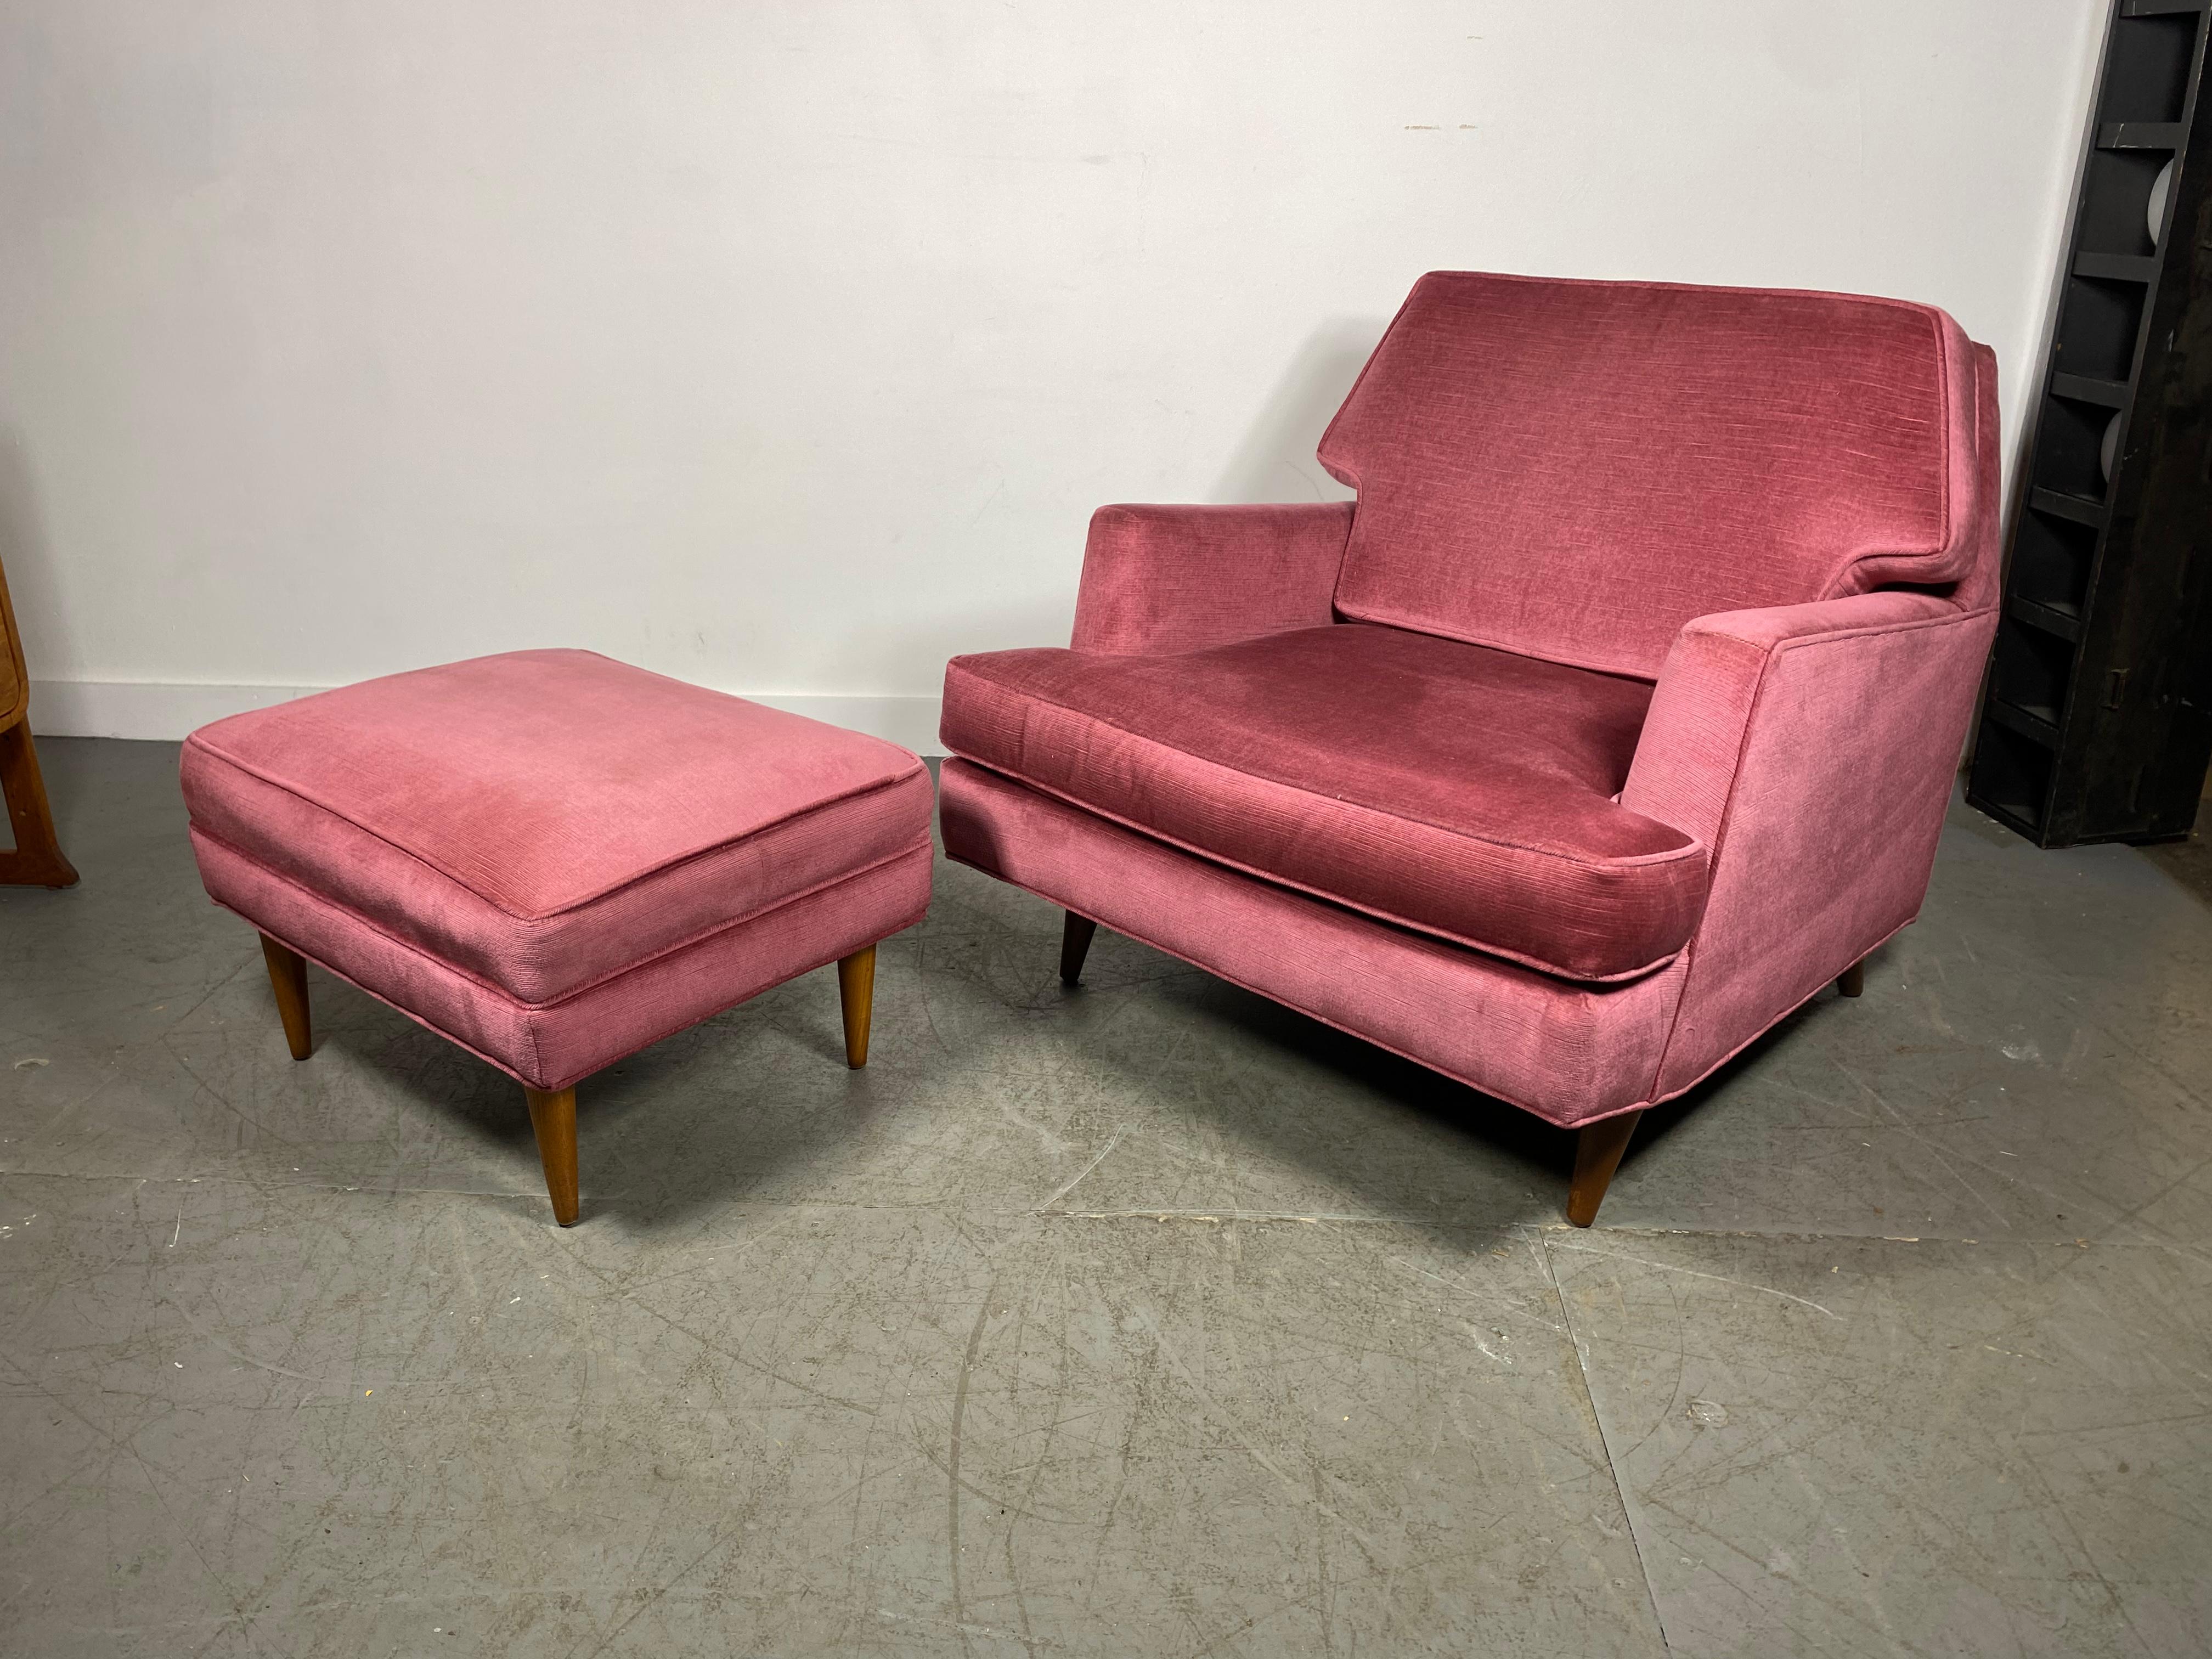 Mid-20th Century Stunning Modernist Lounge Chair & Ott Oman by Roger Springer for Dunbar For Sale